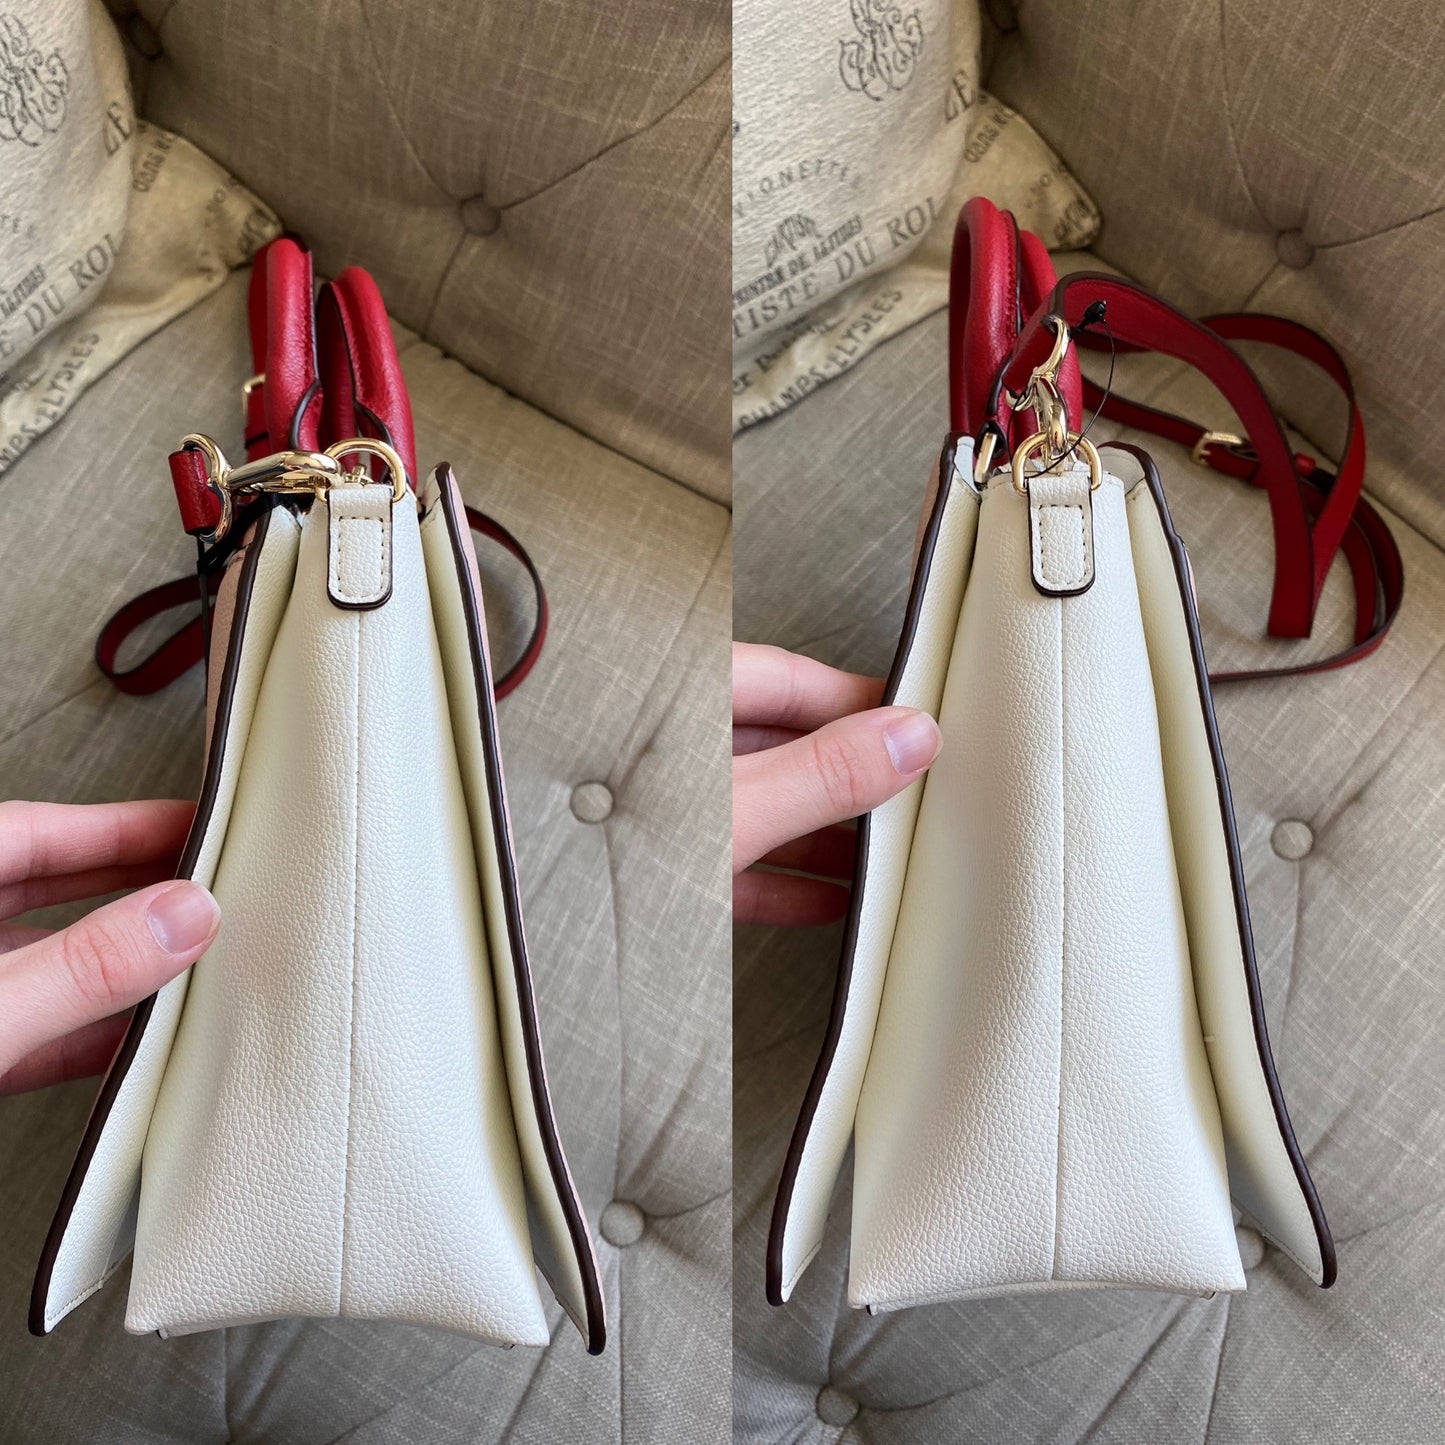 DKNY Clara Leather Satchel Crossbody Bag